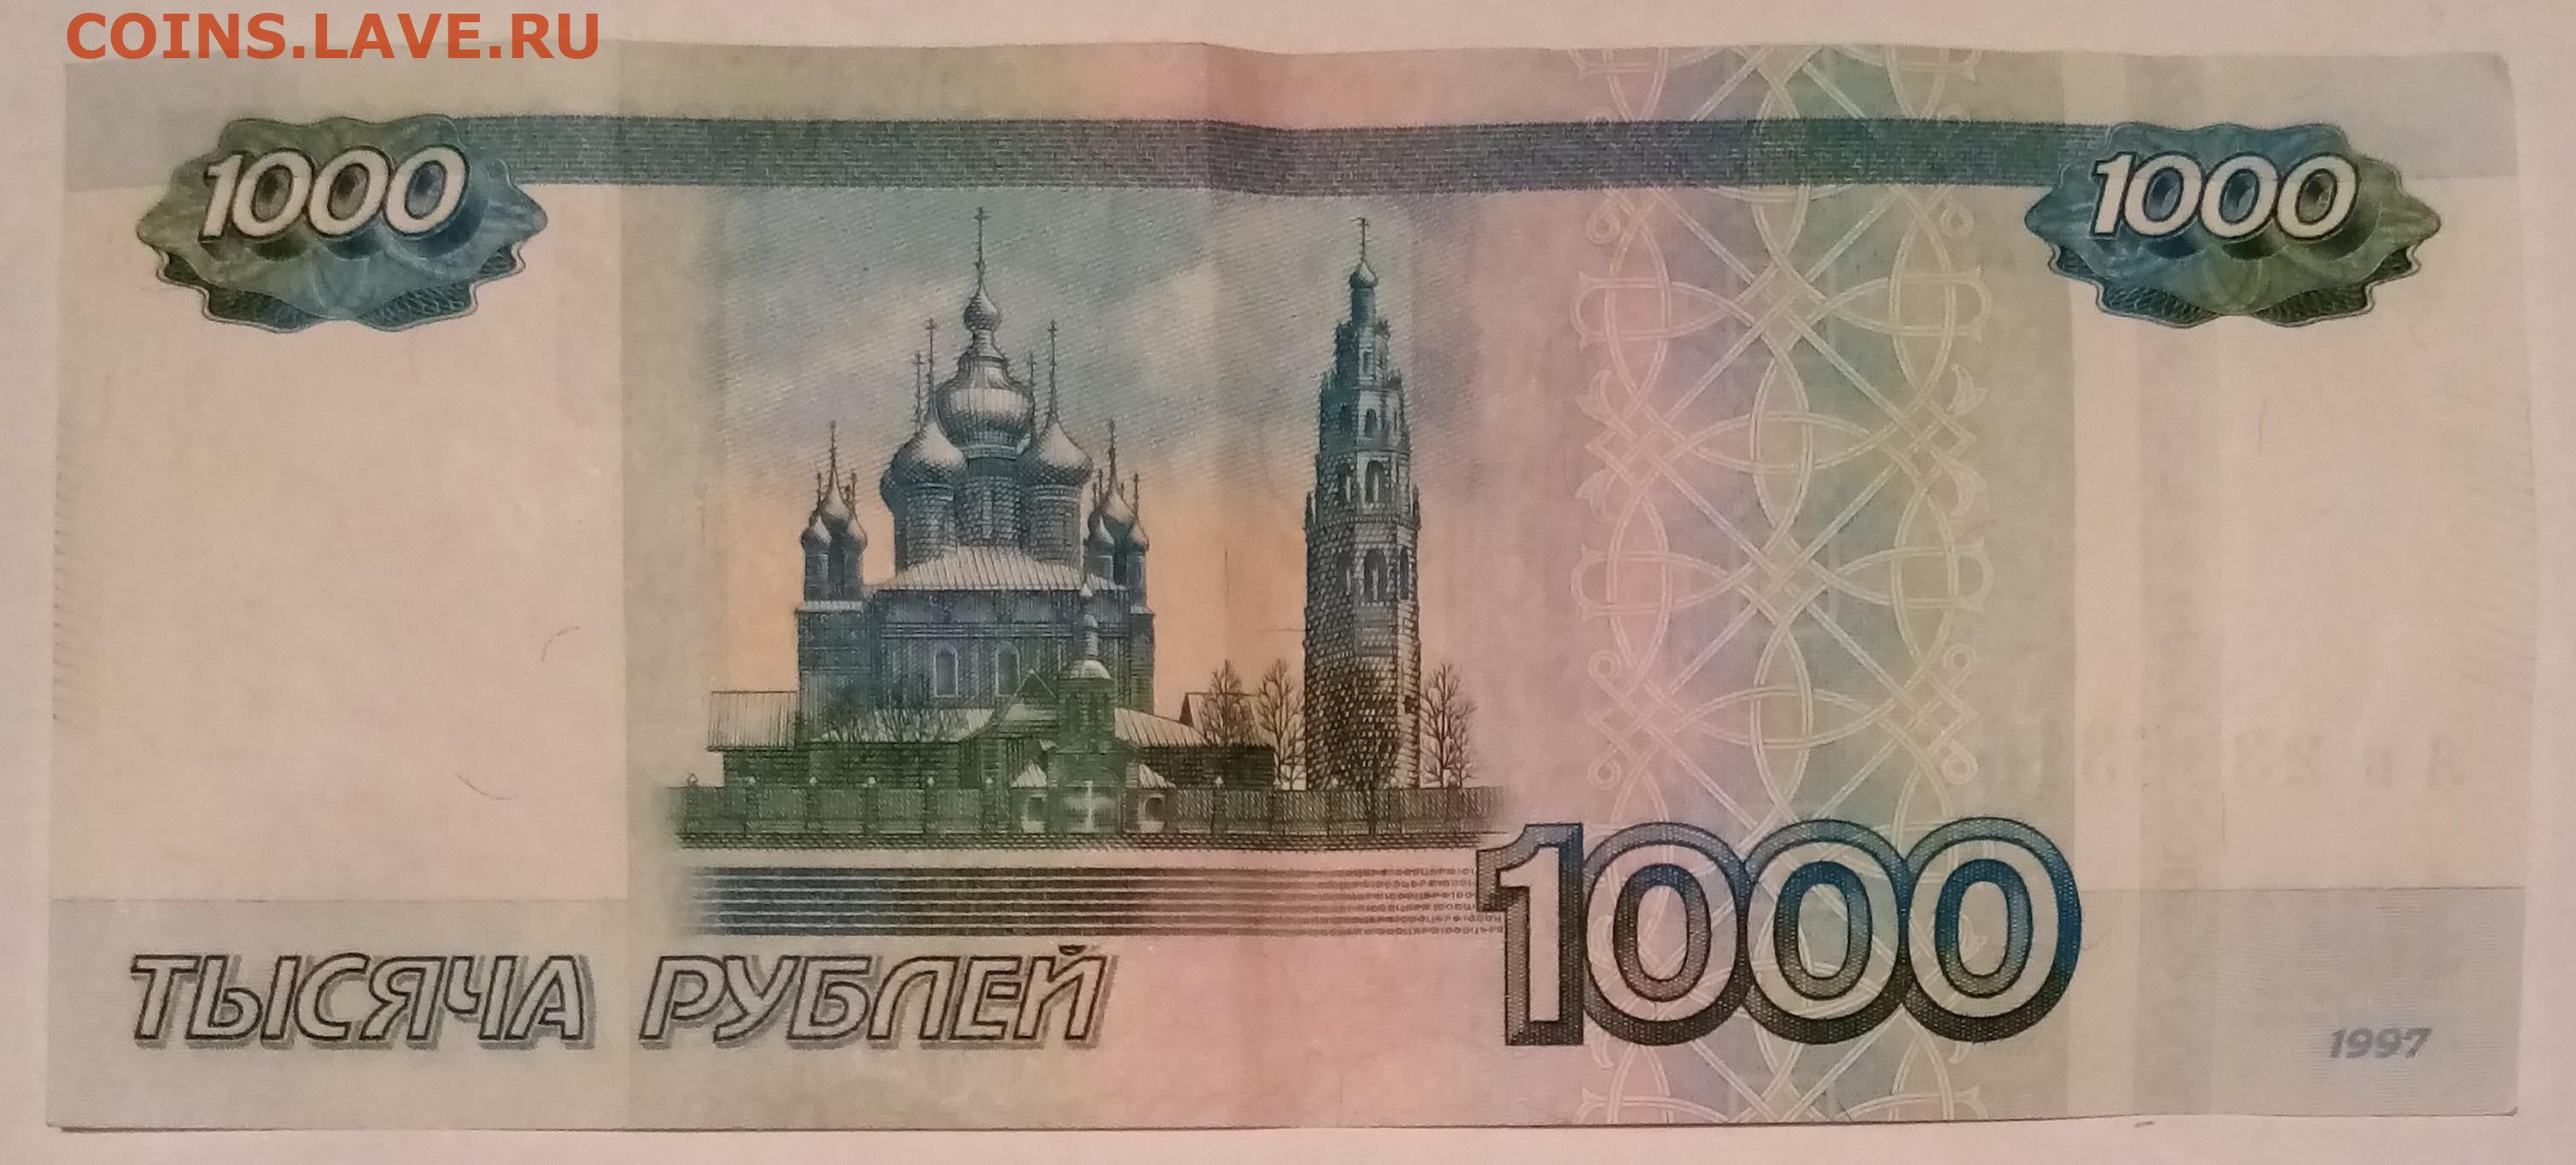 Нужны деньги 1000. Деньги 1000. Деньги 1000 рублей. 1000 Рублей модификация 2010. 100 Рублей модификация 2010.